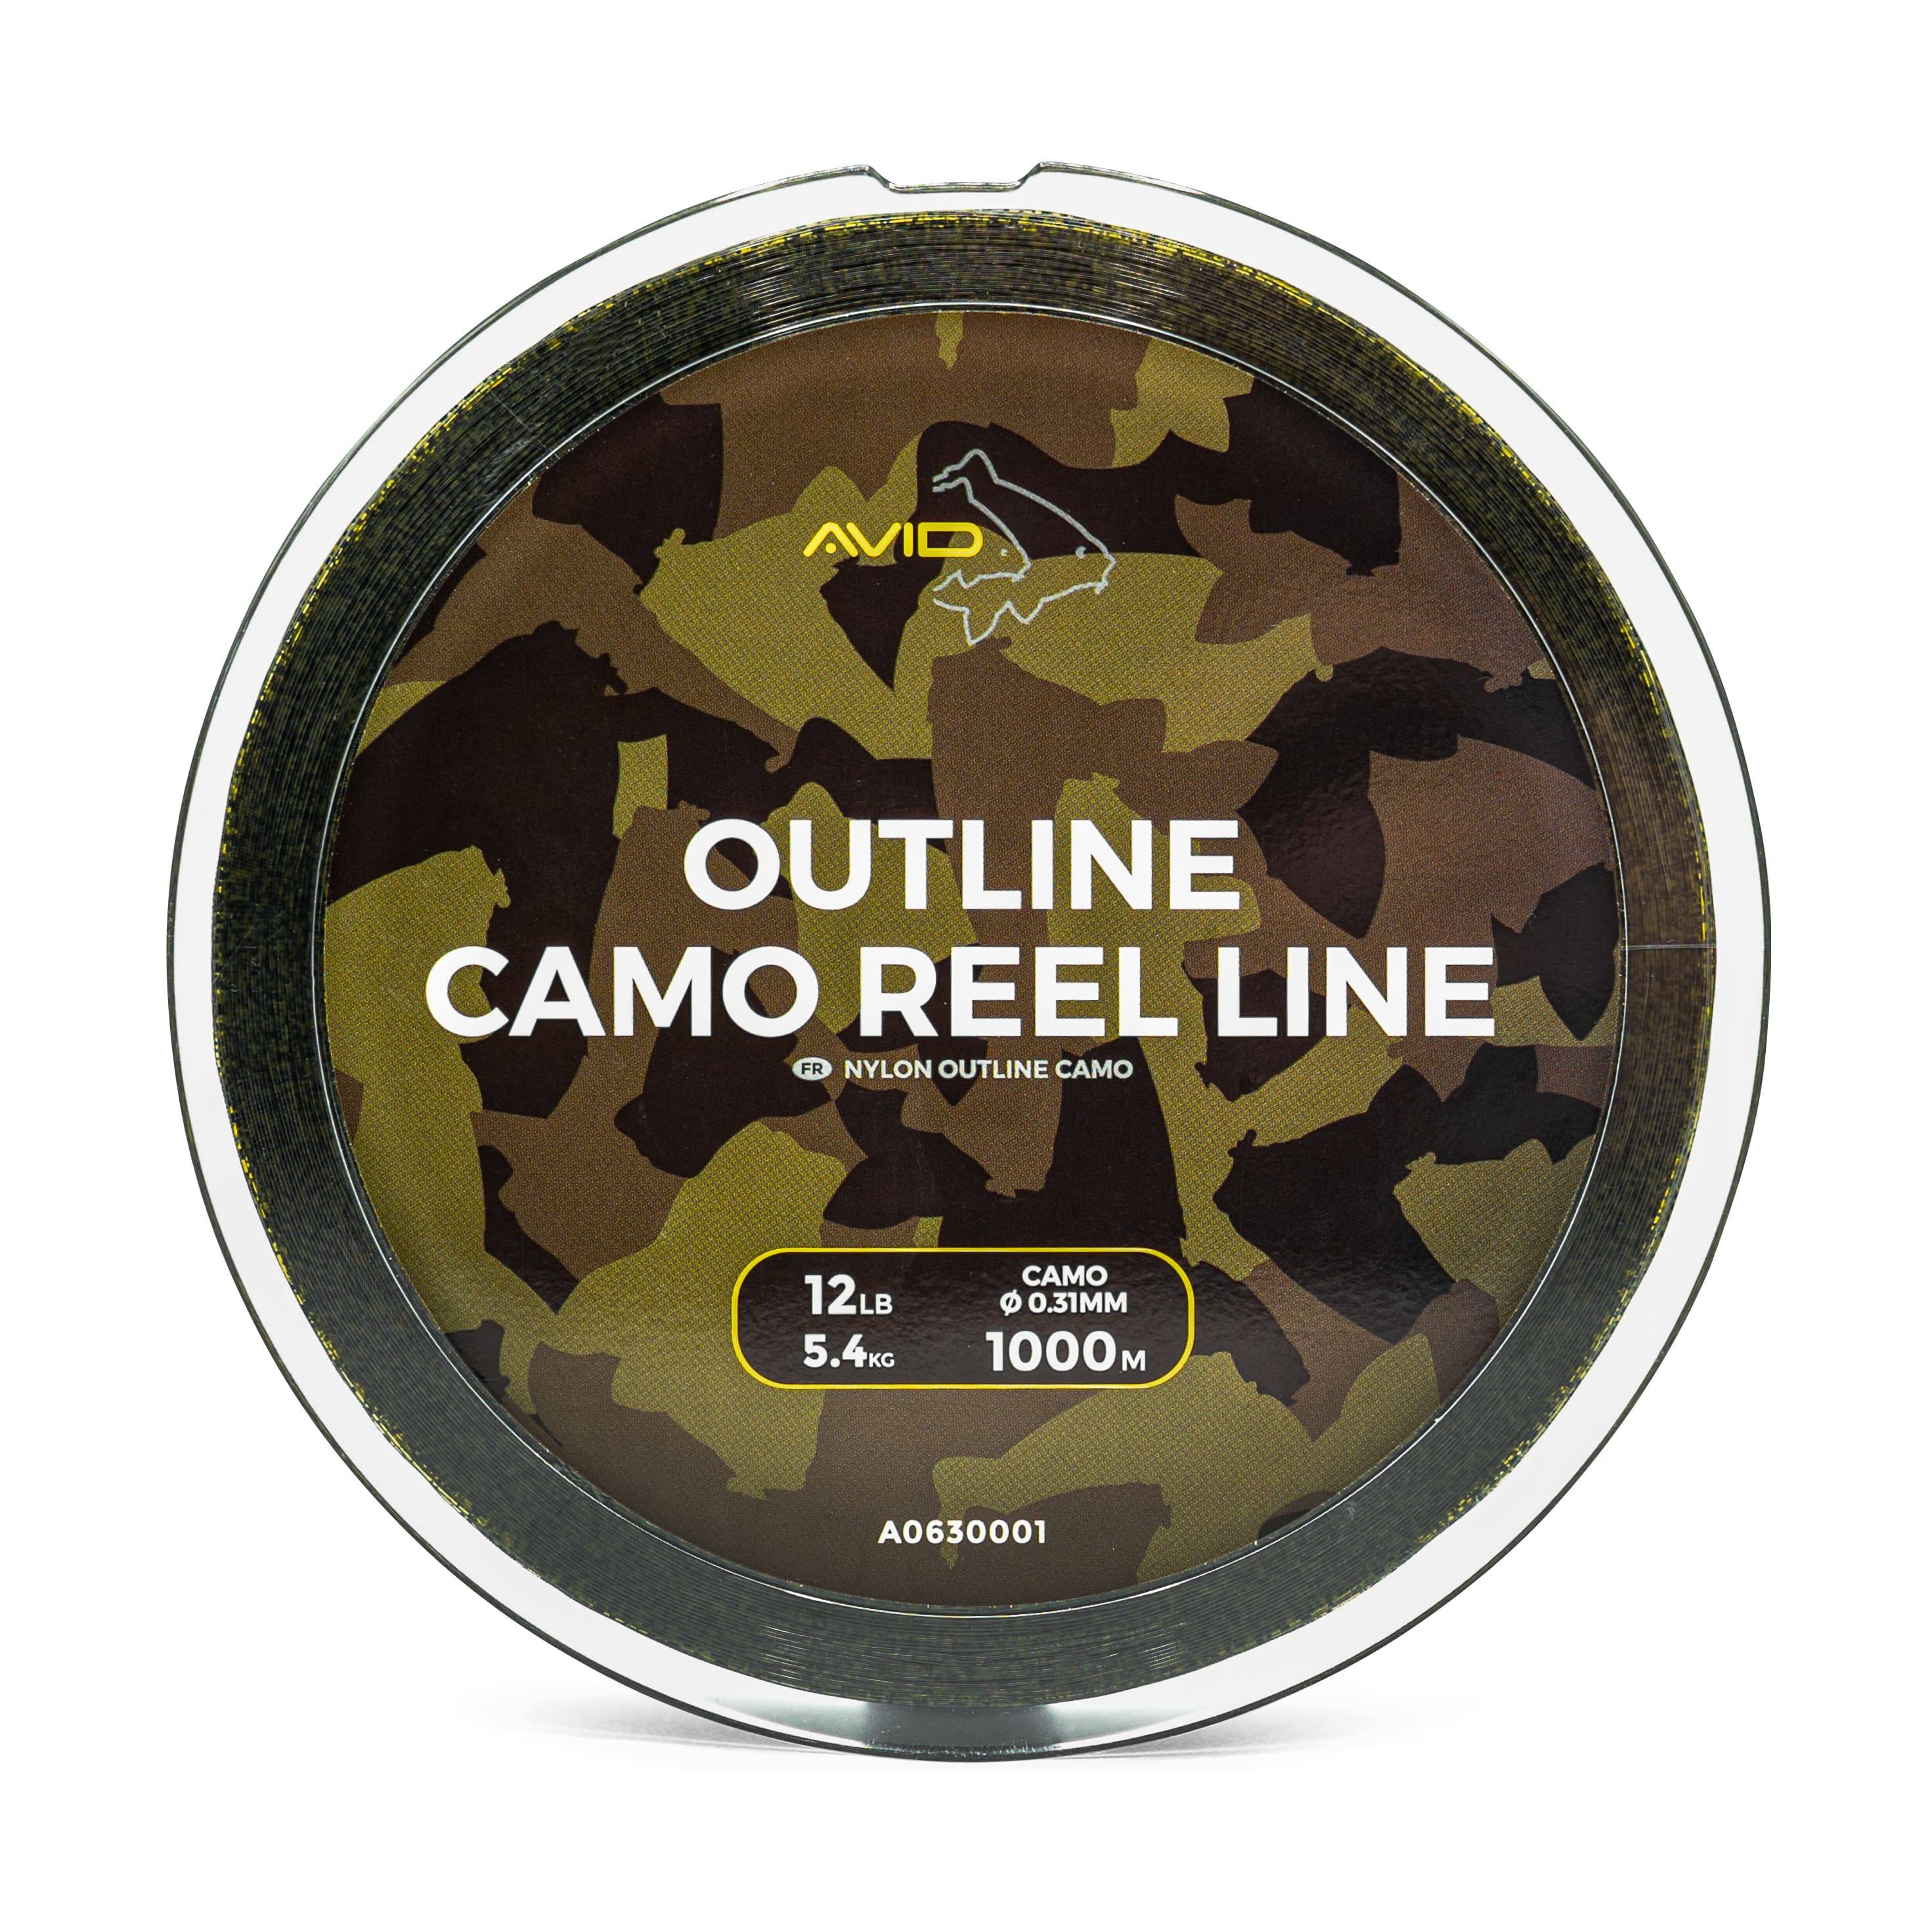 Laks Avid 1,000M Camo Reel Line 0.31mm 12Lb